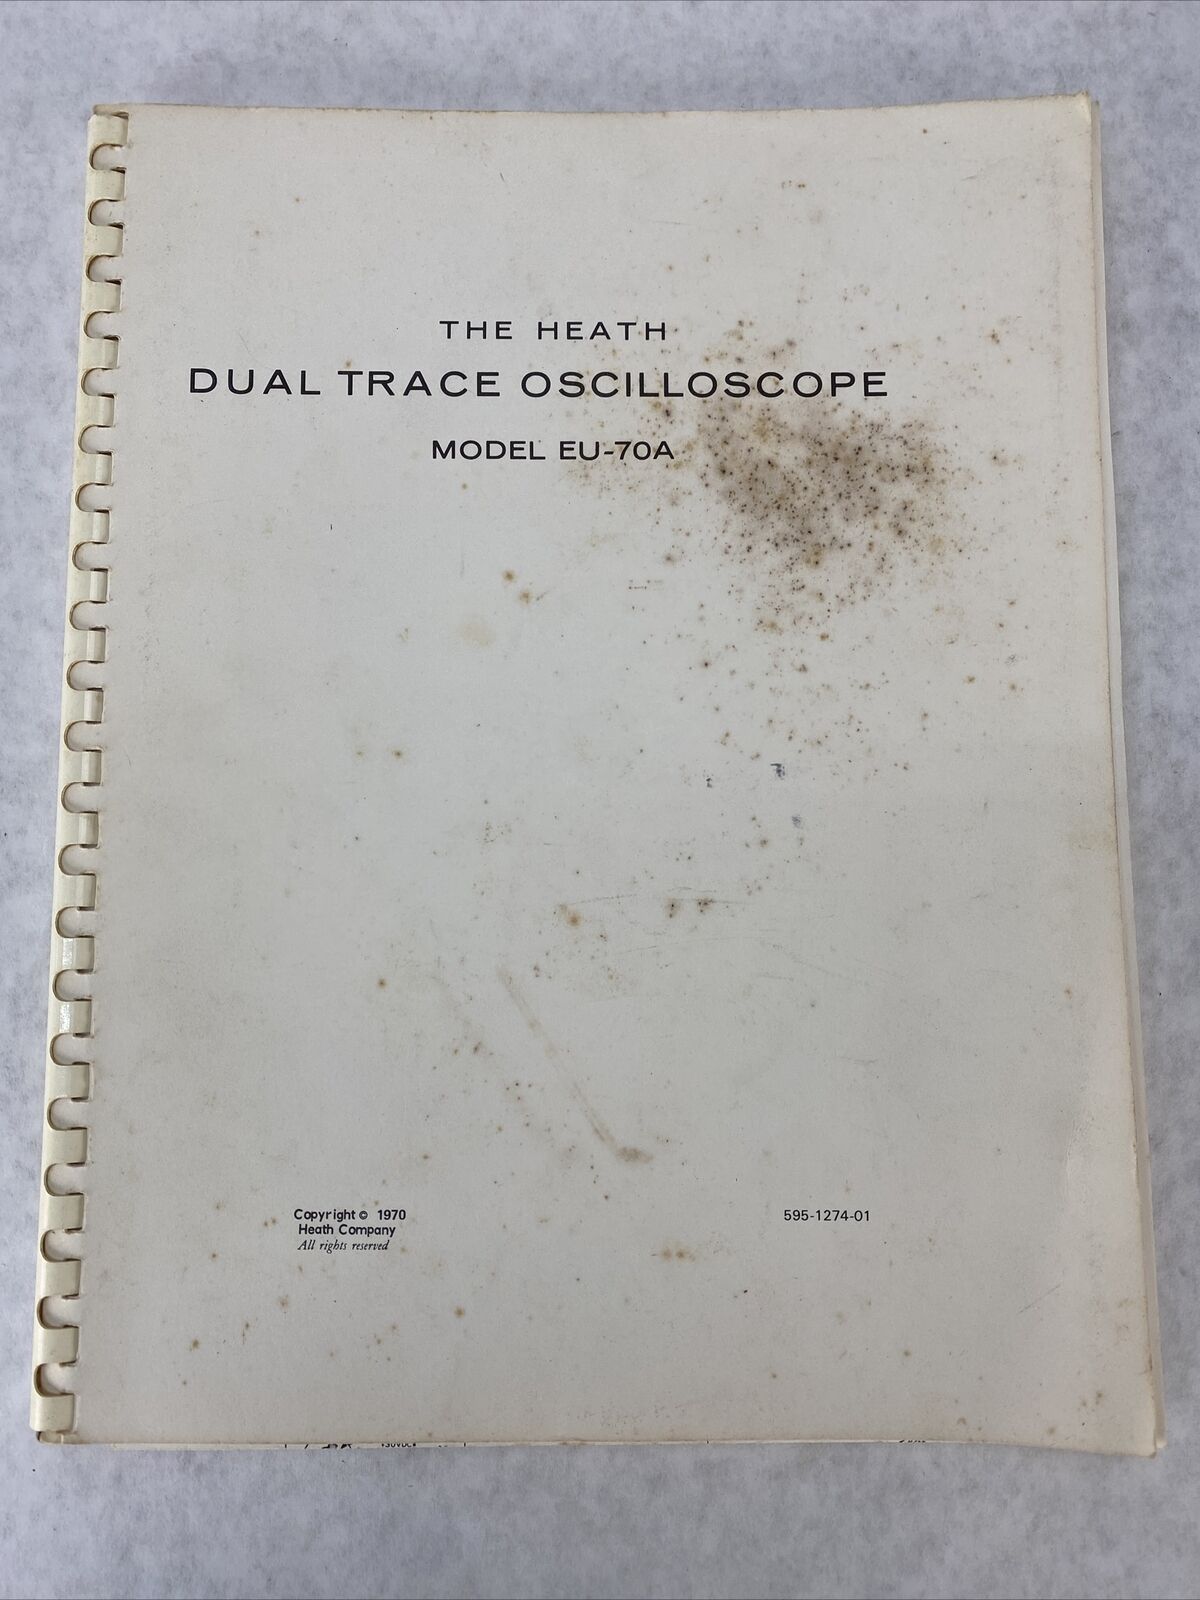 The Heath Original Manual Dual Trace Oscilloscope Model EU-70A 1970 595-1274-01